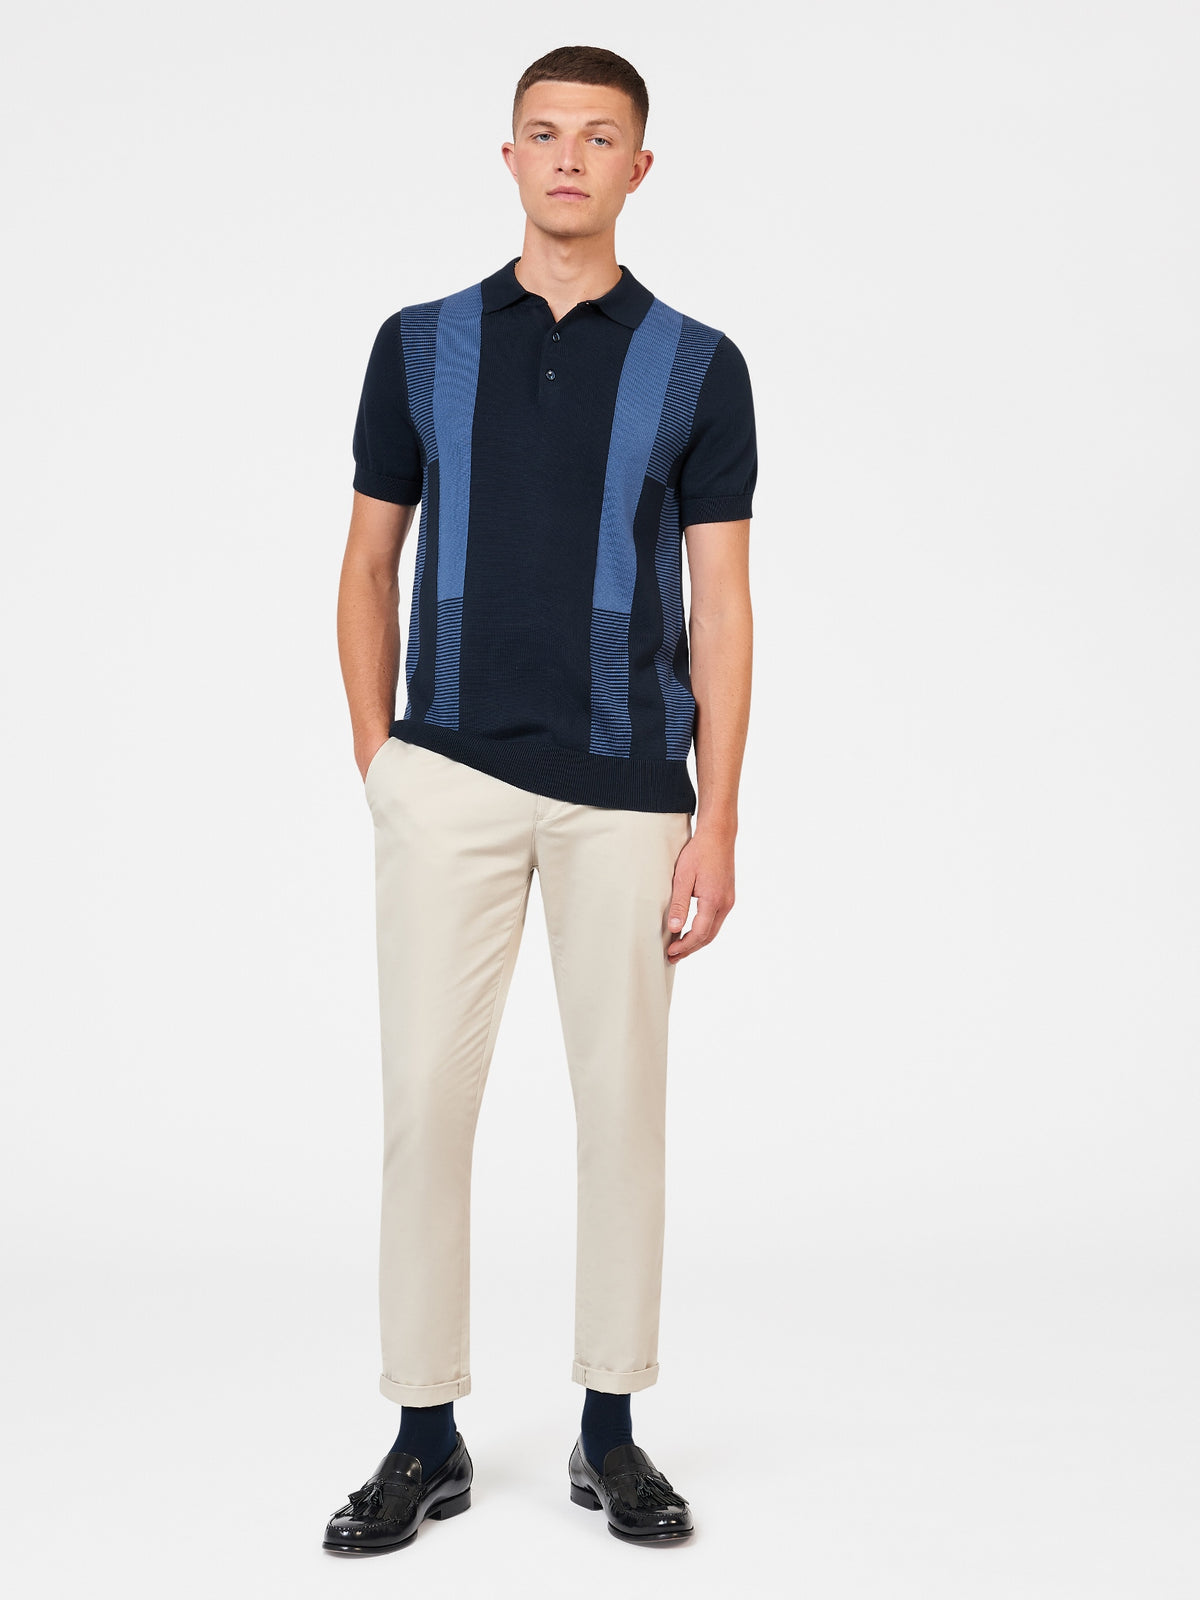 Ben Sherman Mens Inarsia Stripe Knit Polo Shirt, 04, 74196, Dark Navy